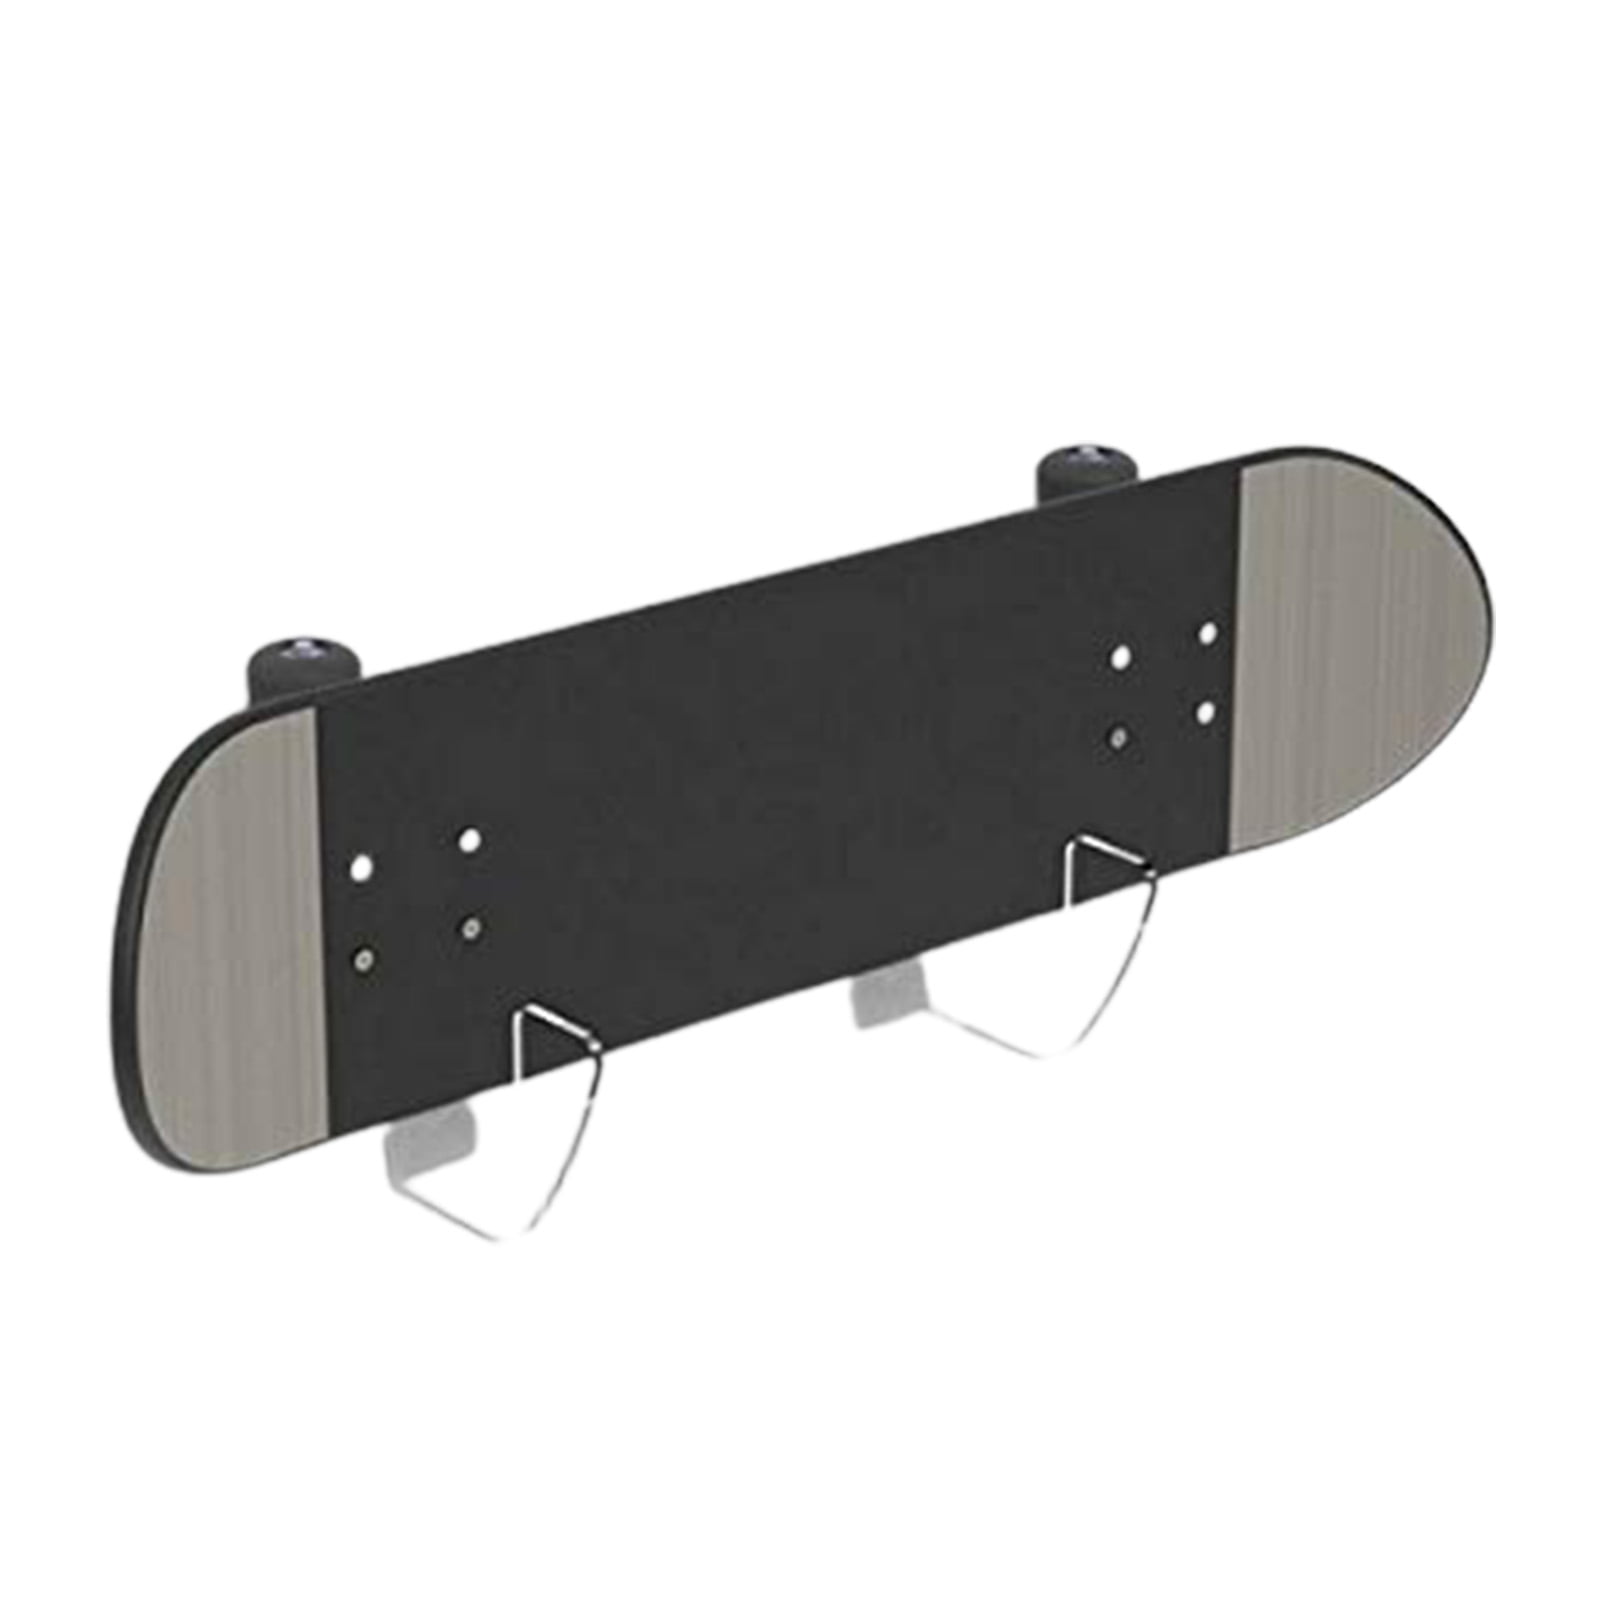 2 X Snowboard Black-Red Longboard Hanger Holder Display Storage Rack Wall Mount 